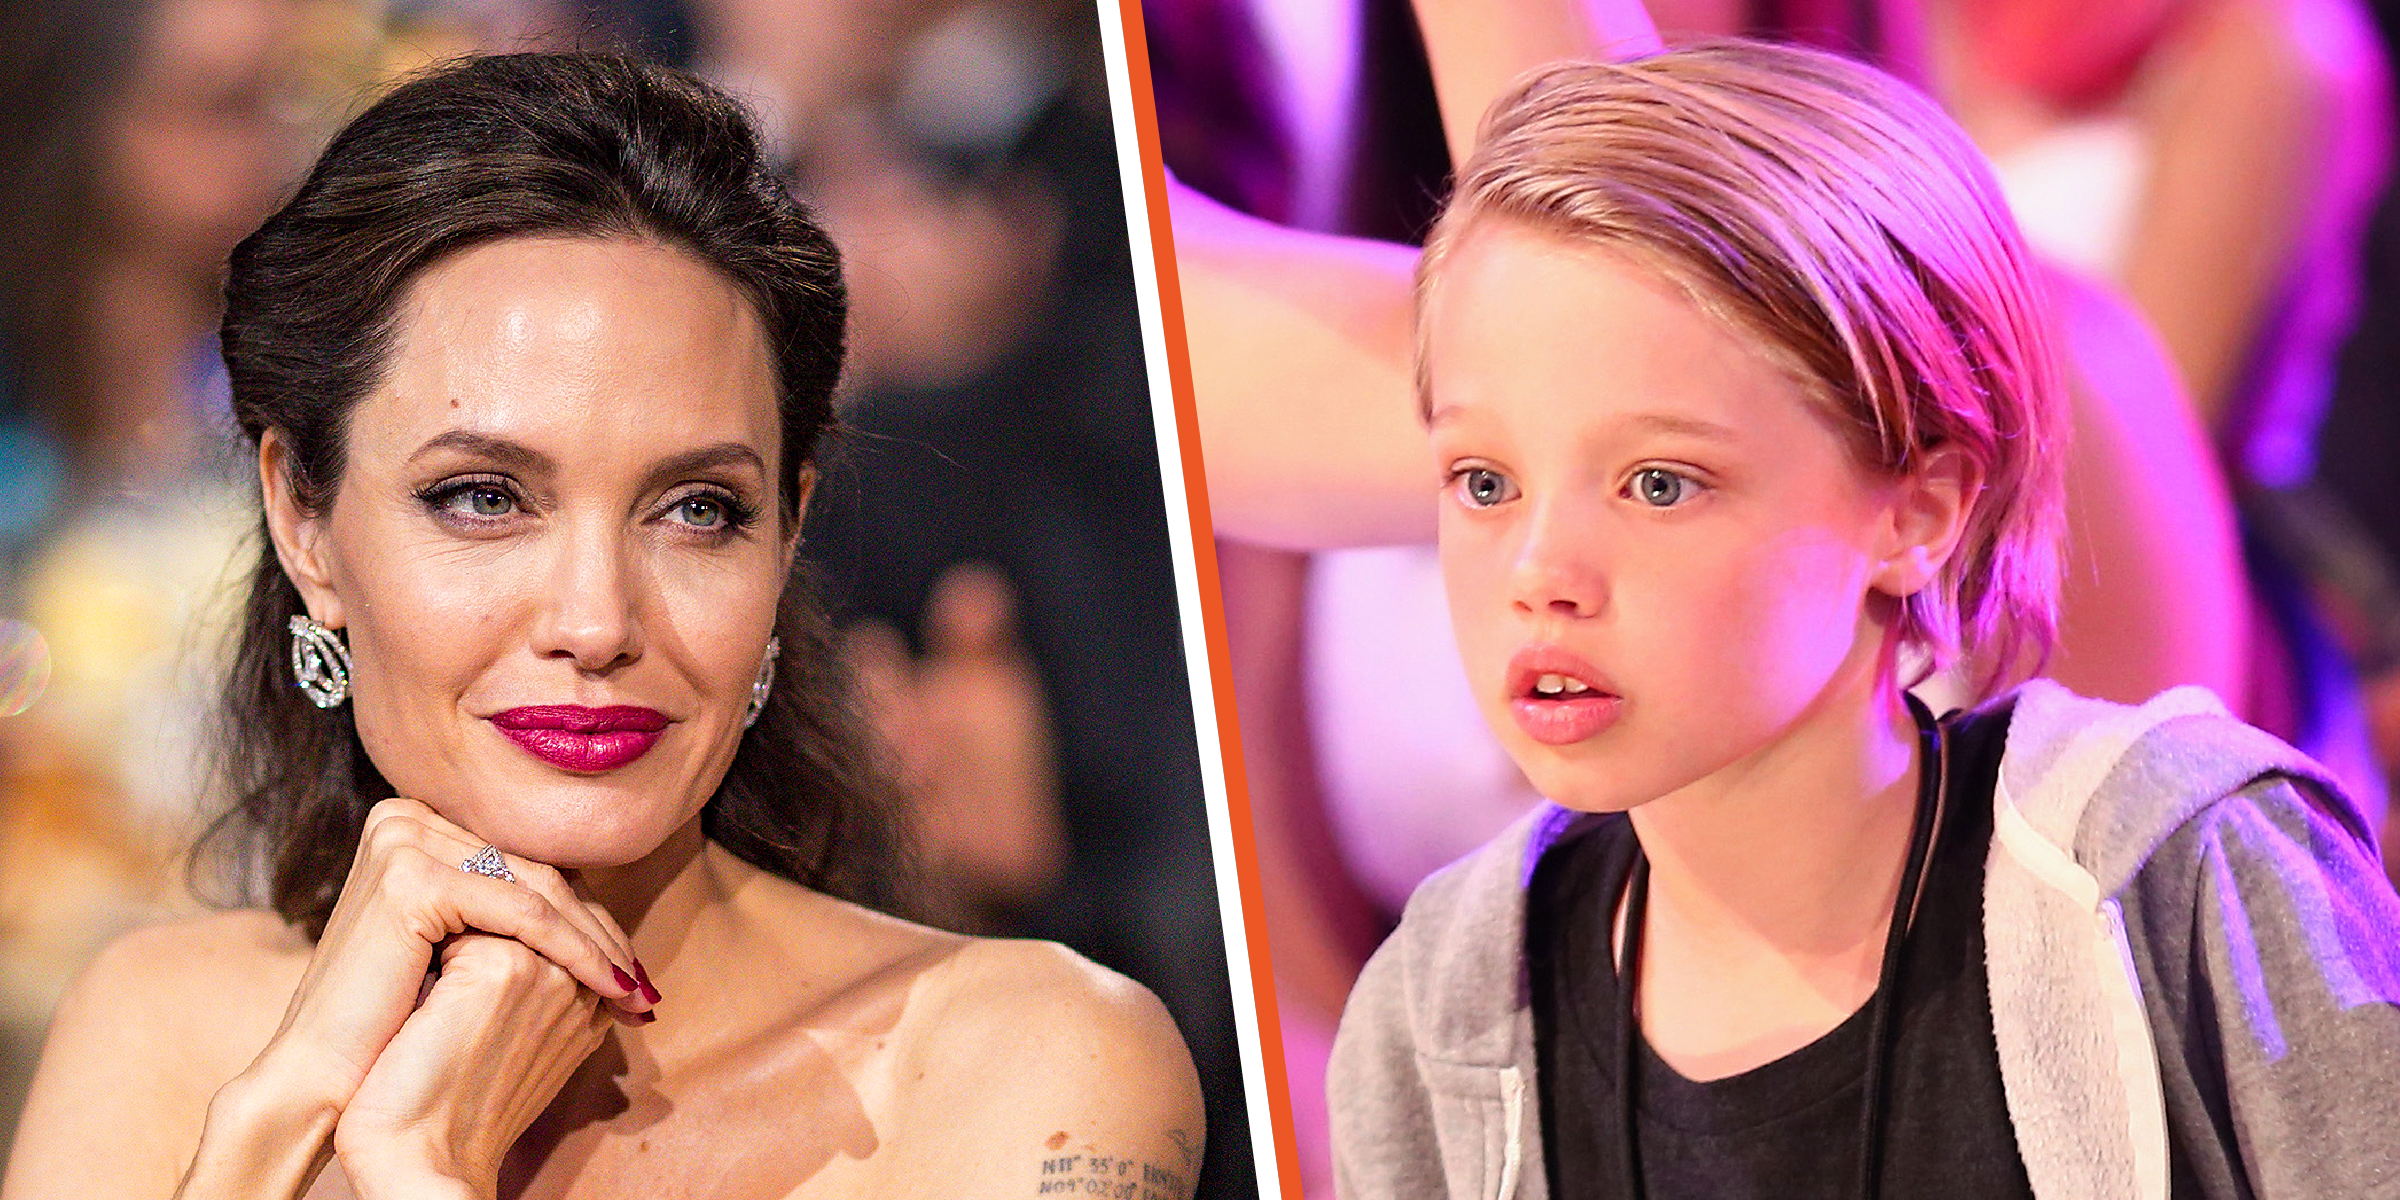 Angelina Jolie | Shiloh Jolie-Pitt | Source: Getty Images